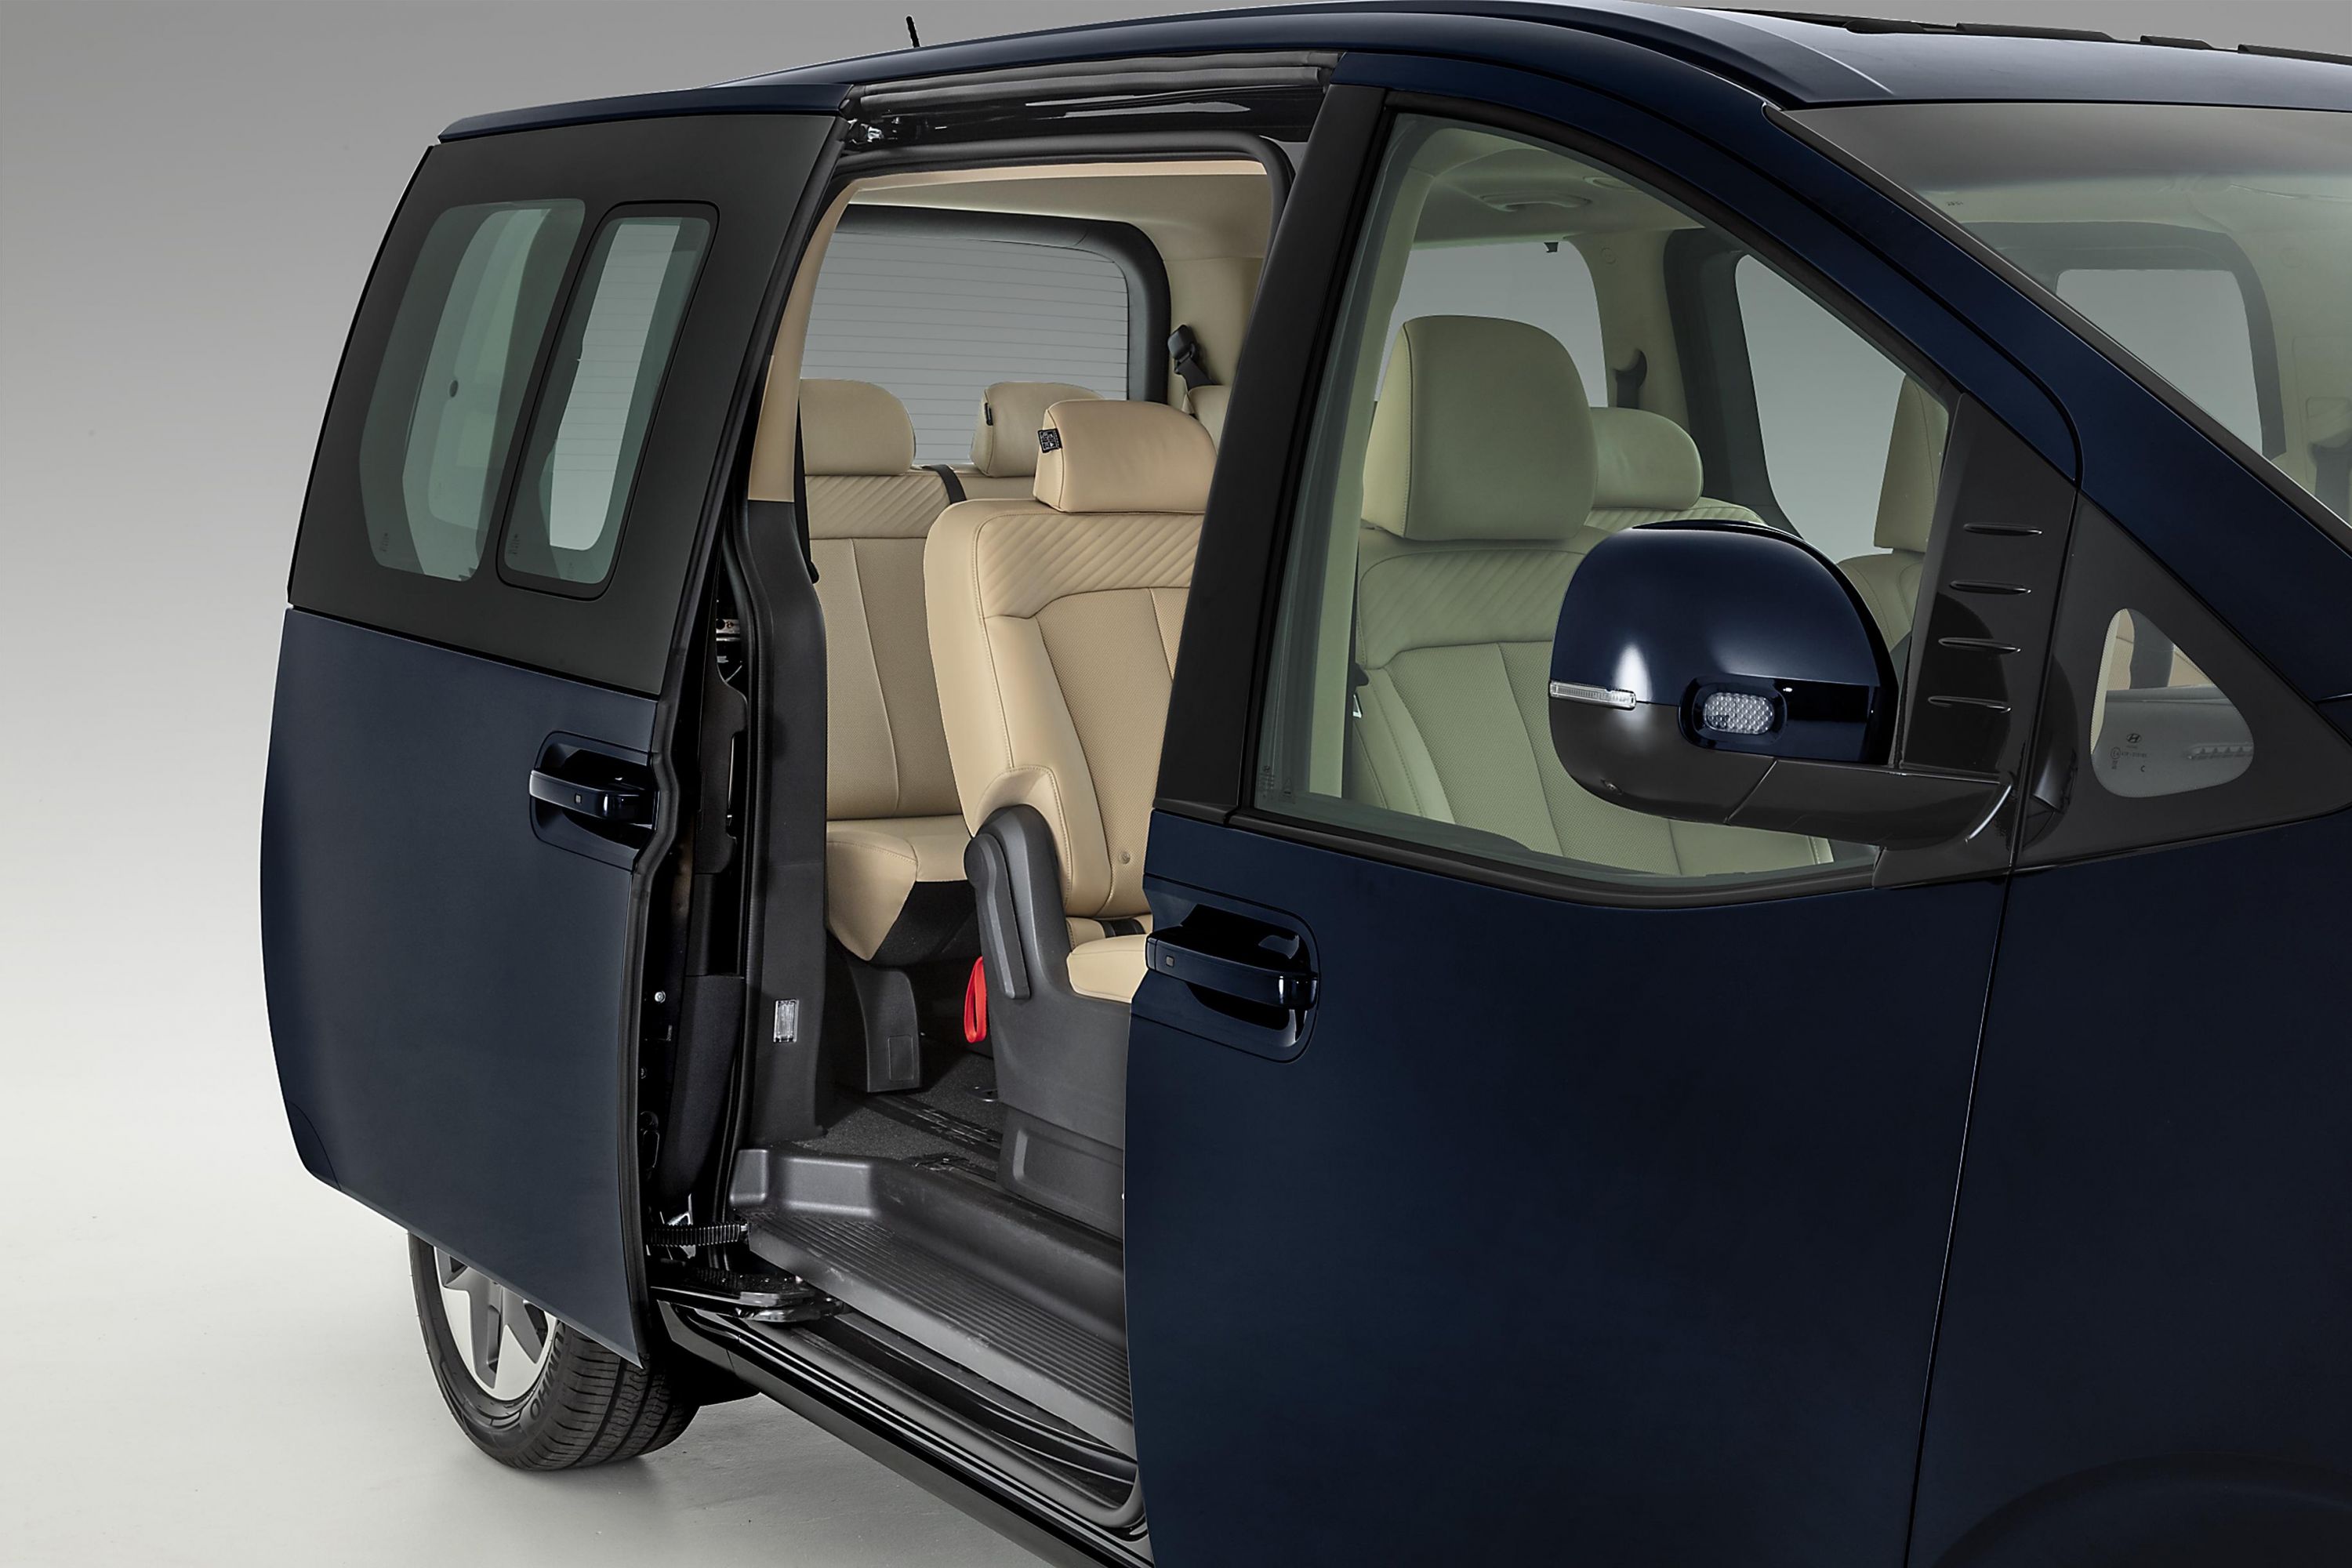 Hyundai specs its otherworldly Staria van and previews camper car